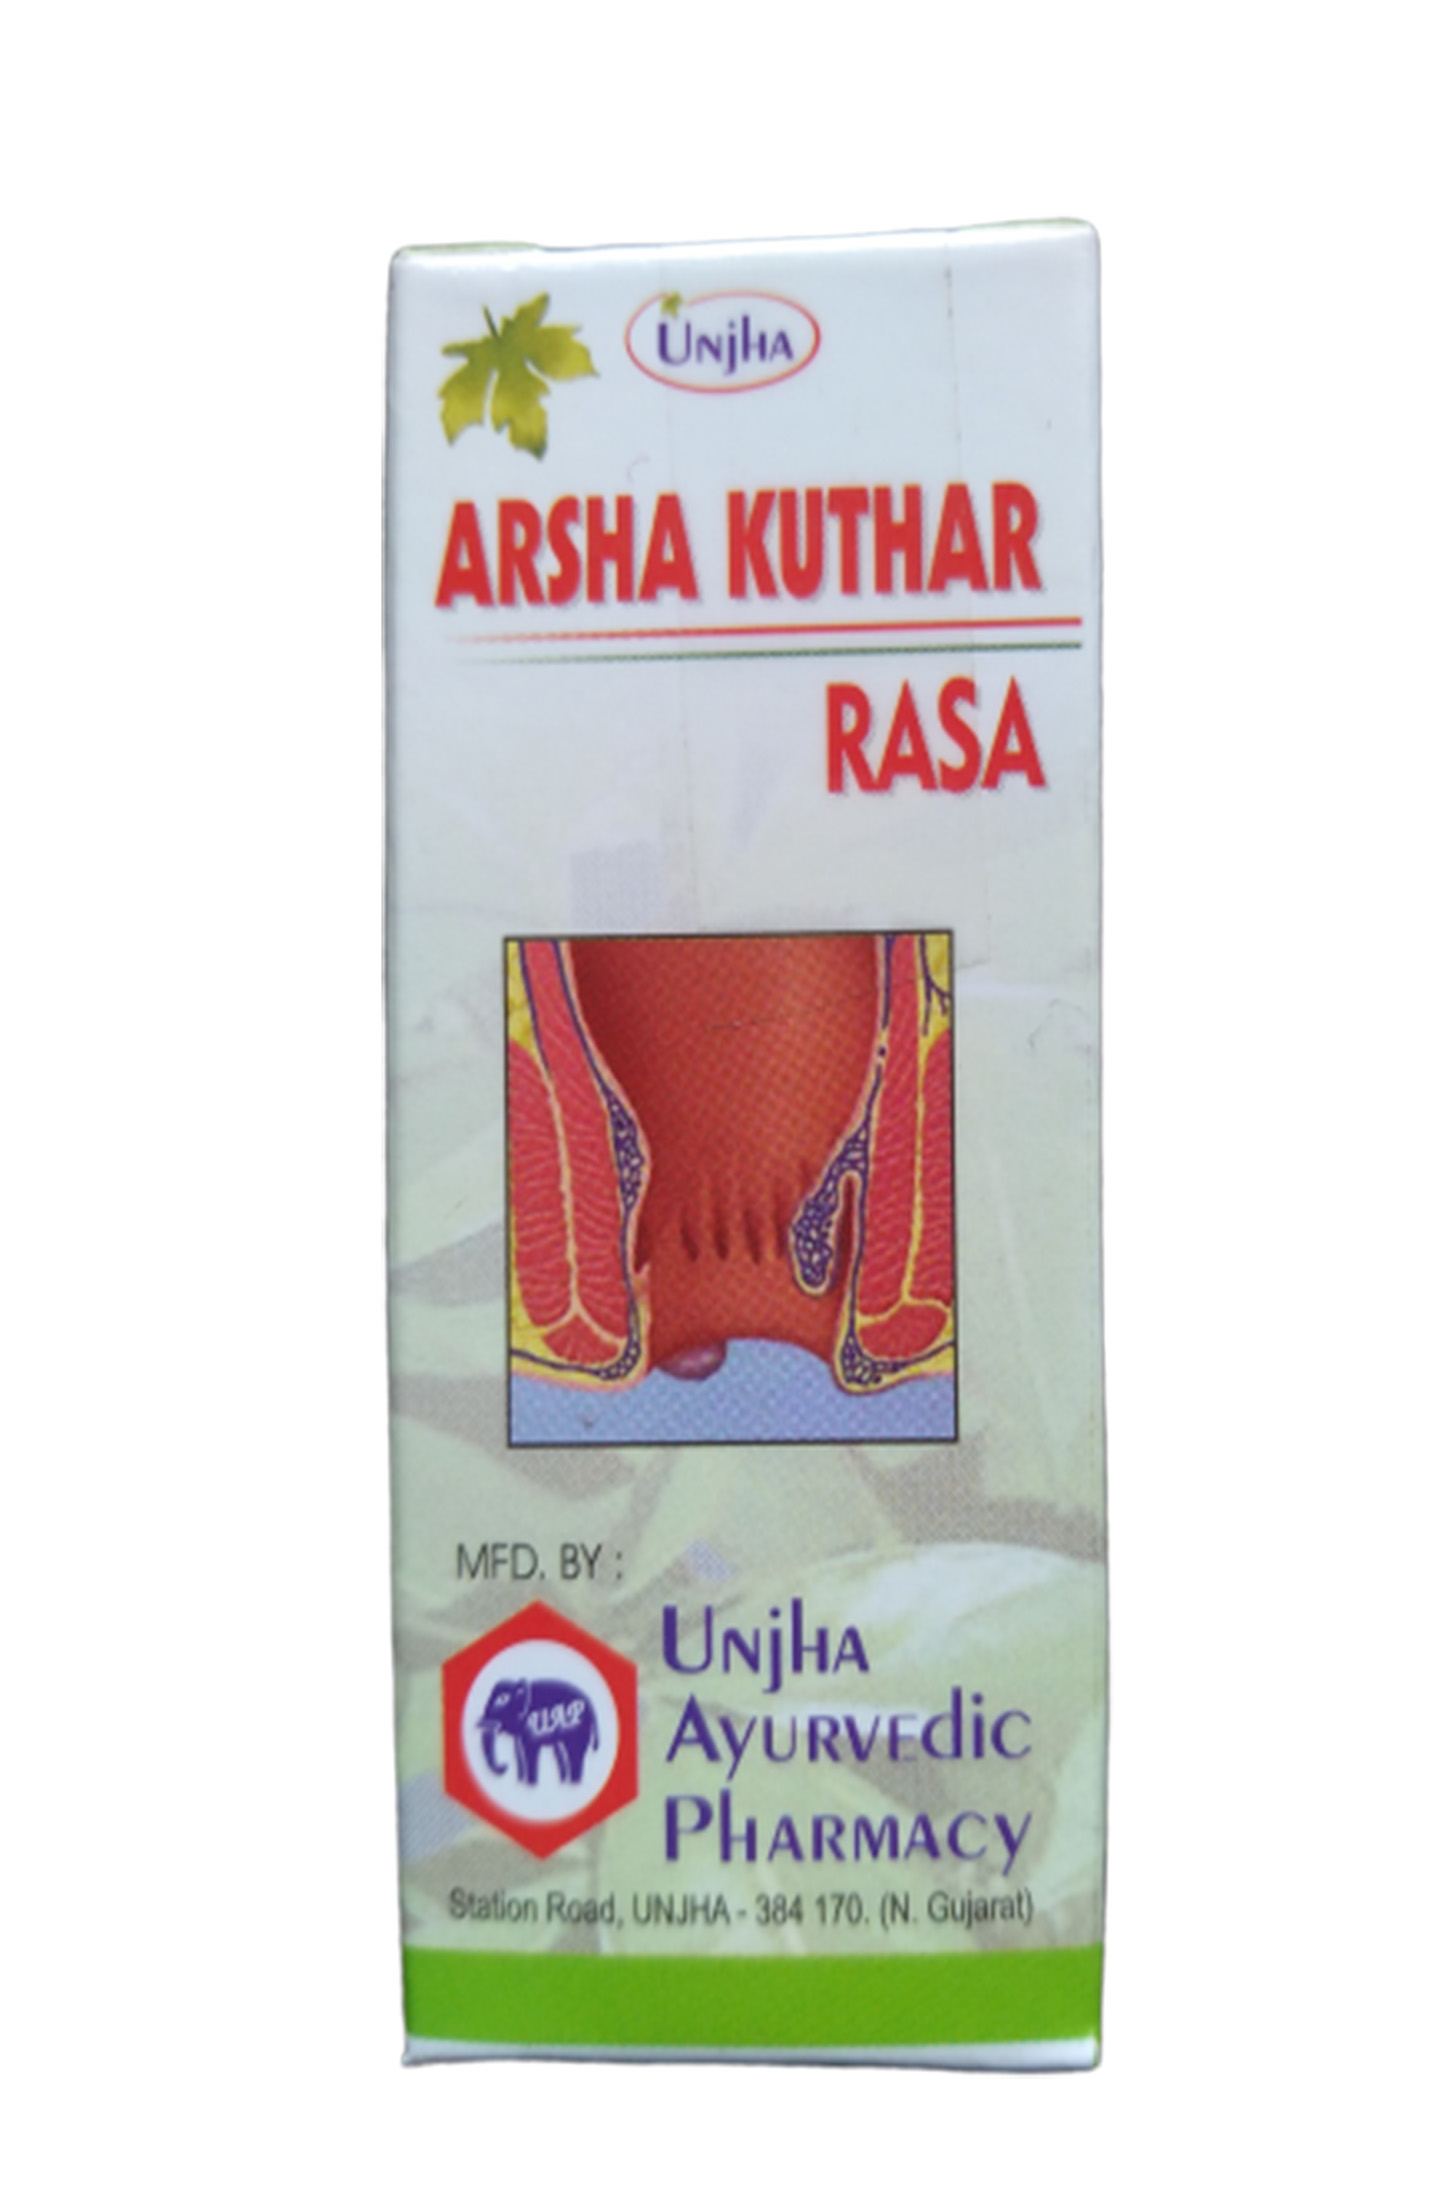 Buy Unjha Arsha Kuthar Rasa at Best Price Online